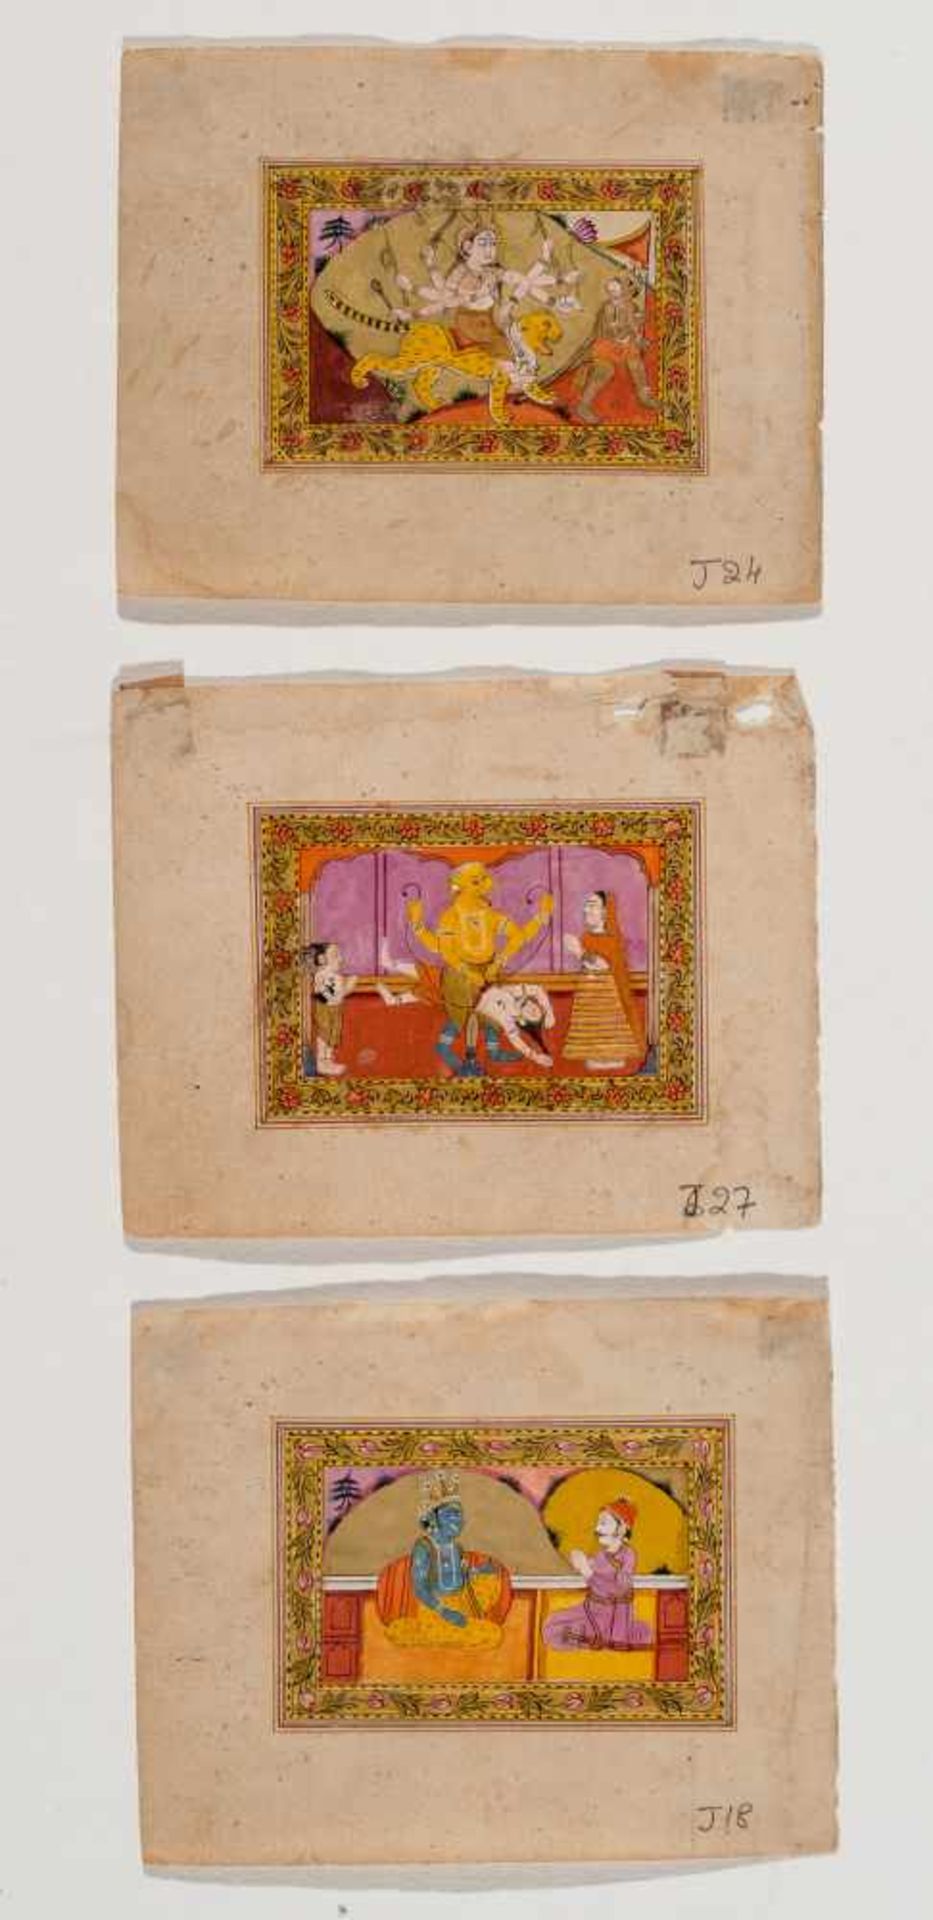 THREE MINIATURE PAINTINGS DEPICTING DIVINE DEITIES – INDIA 19TH CENTURYMiniature paintings with